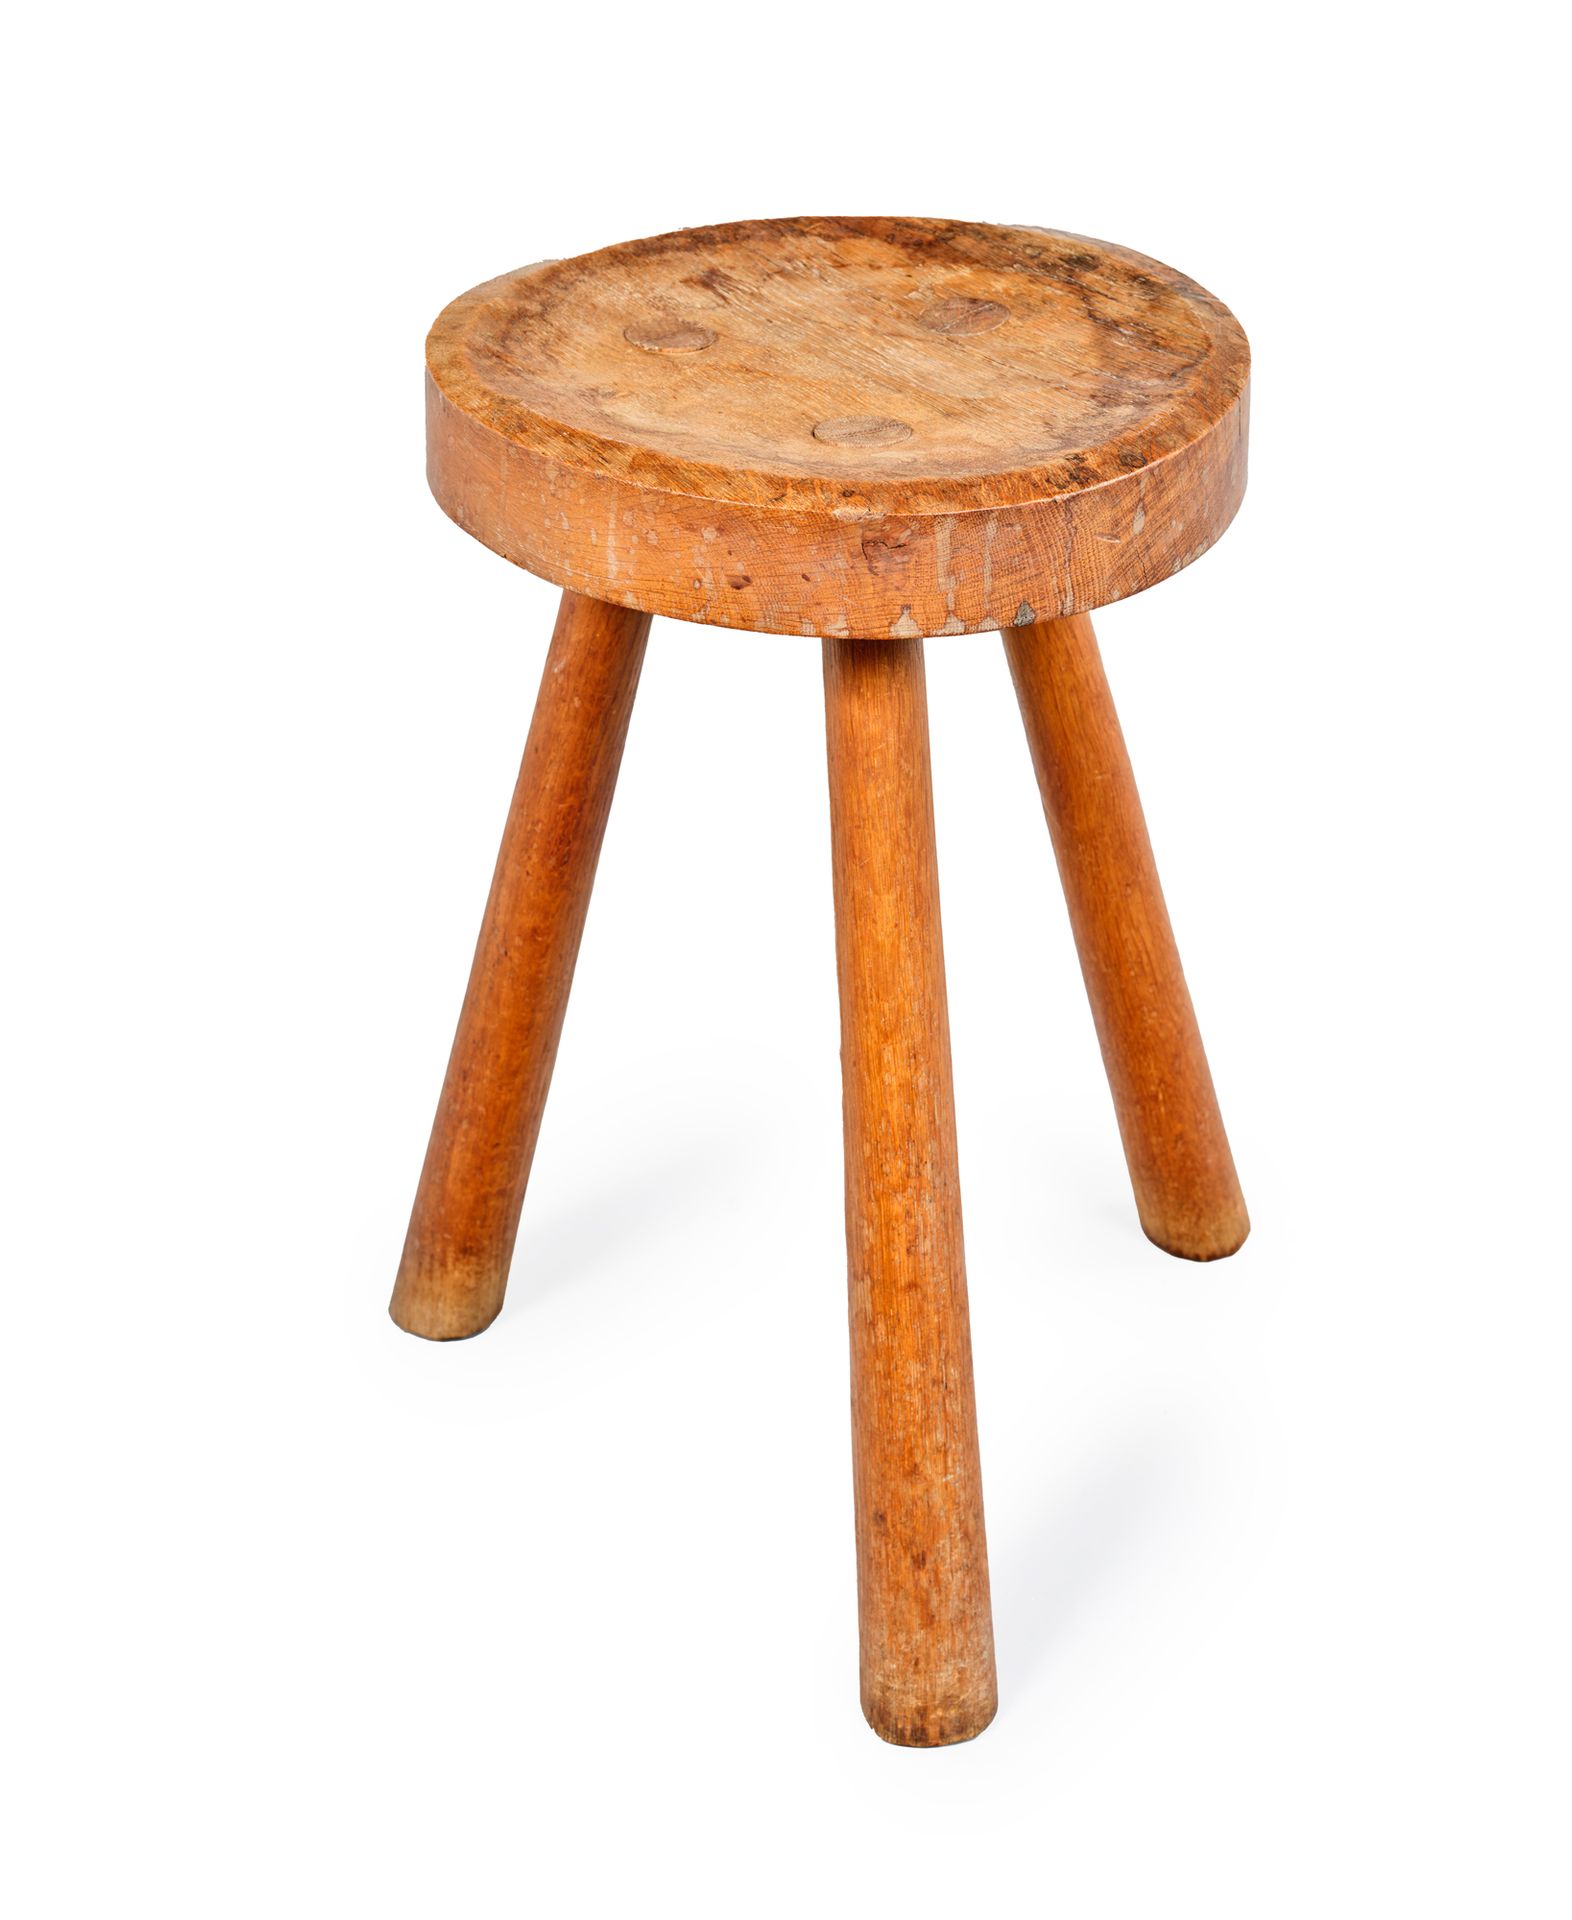 Atelier MAROLLES Carved oak tripod stool
Marolles" incised signature
Circa 1960
&hellip;